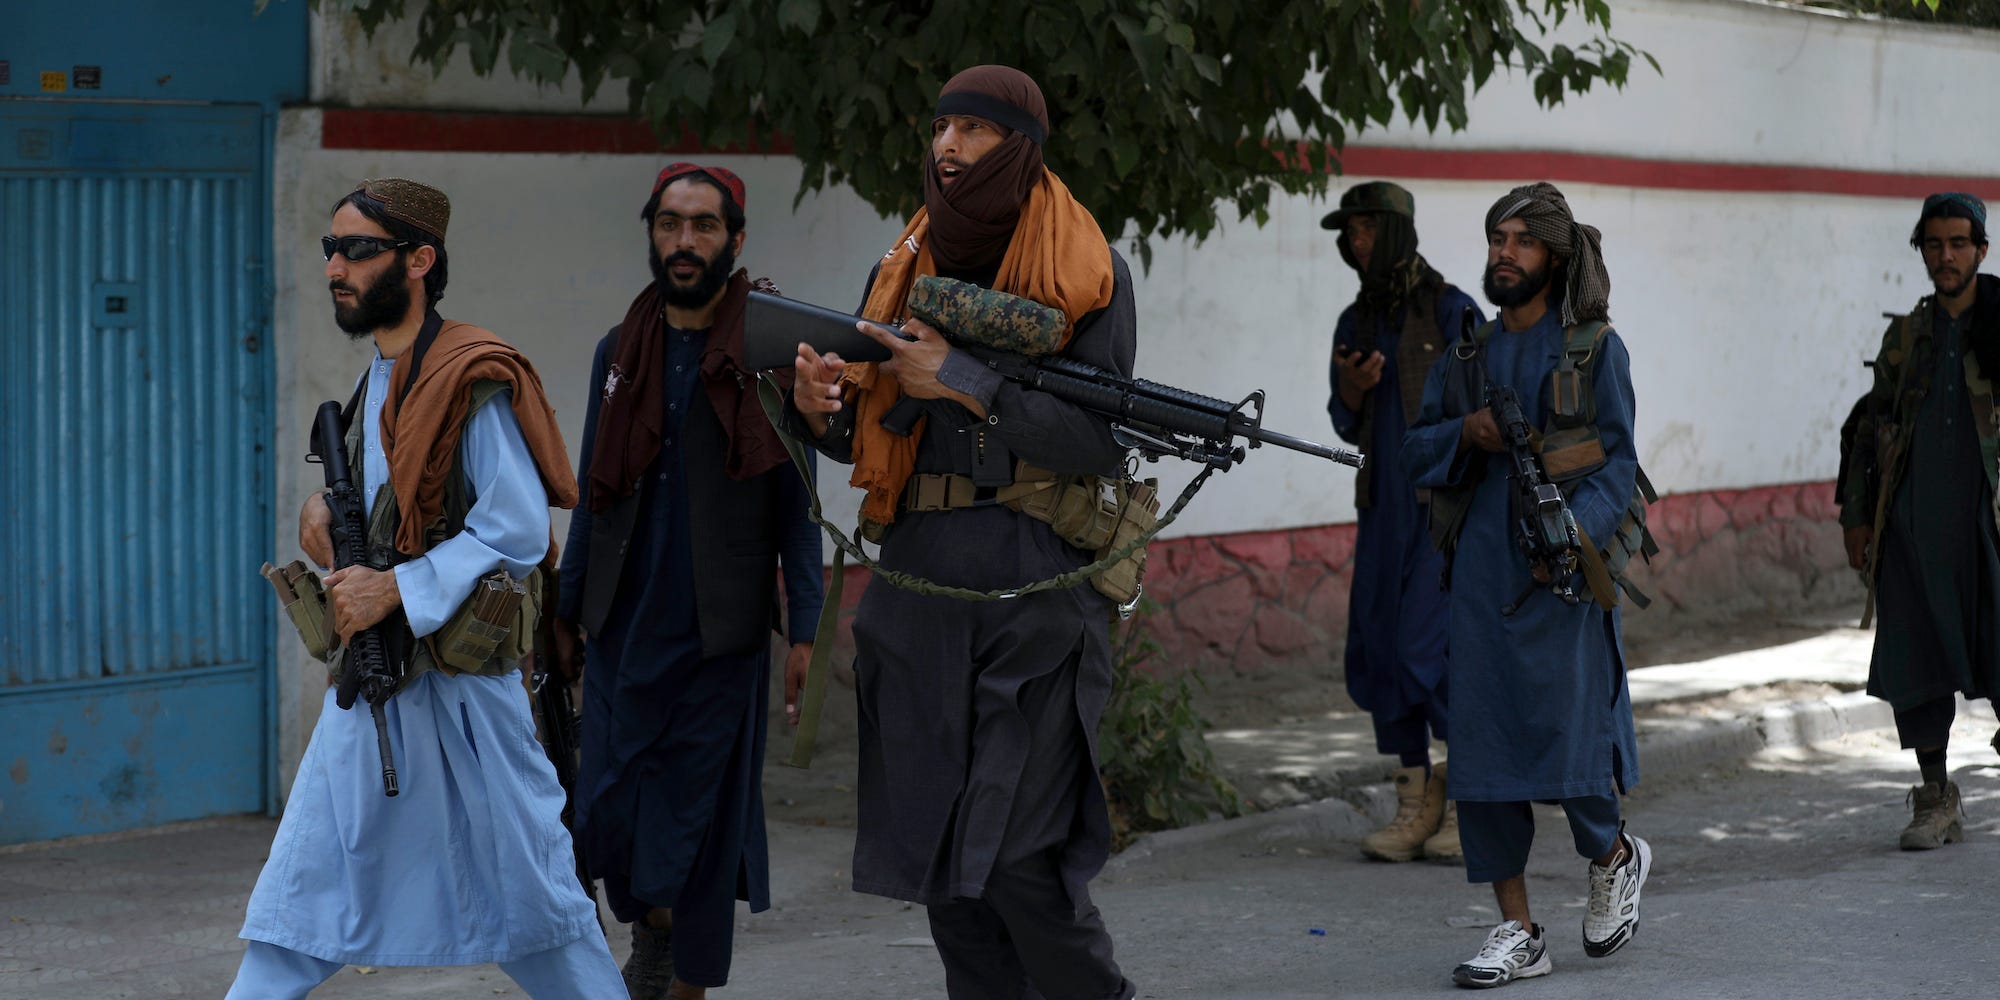 Taliban fighters patrol in Wazir Akbar Khan in the city of Kabul, Afghanistan, Wednesday, Aug. 18, 2021.